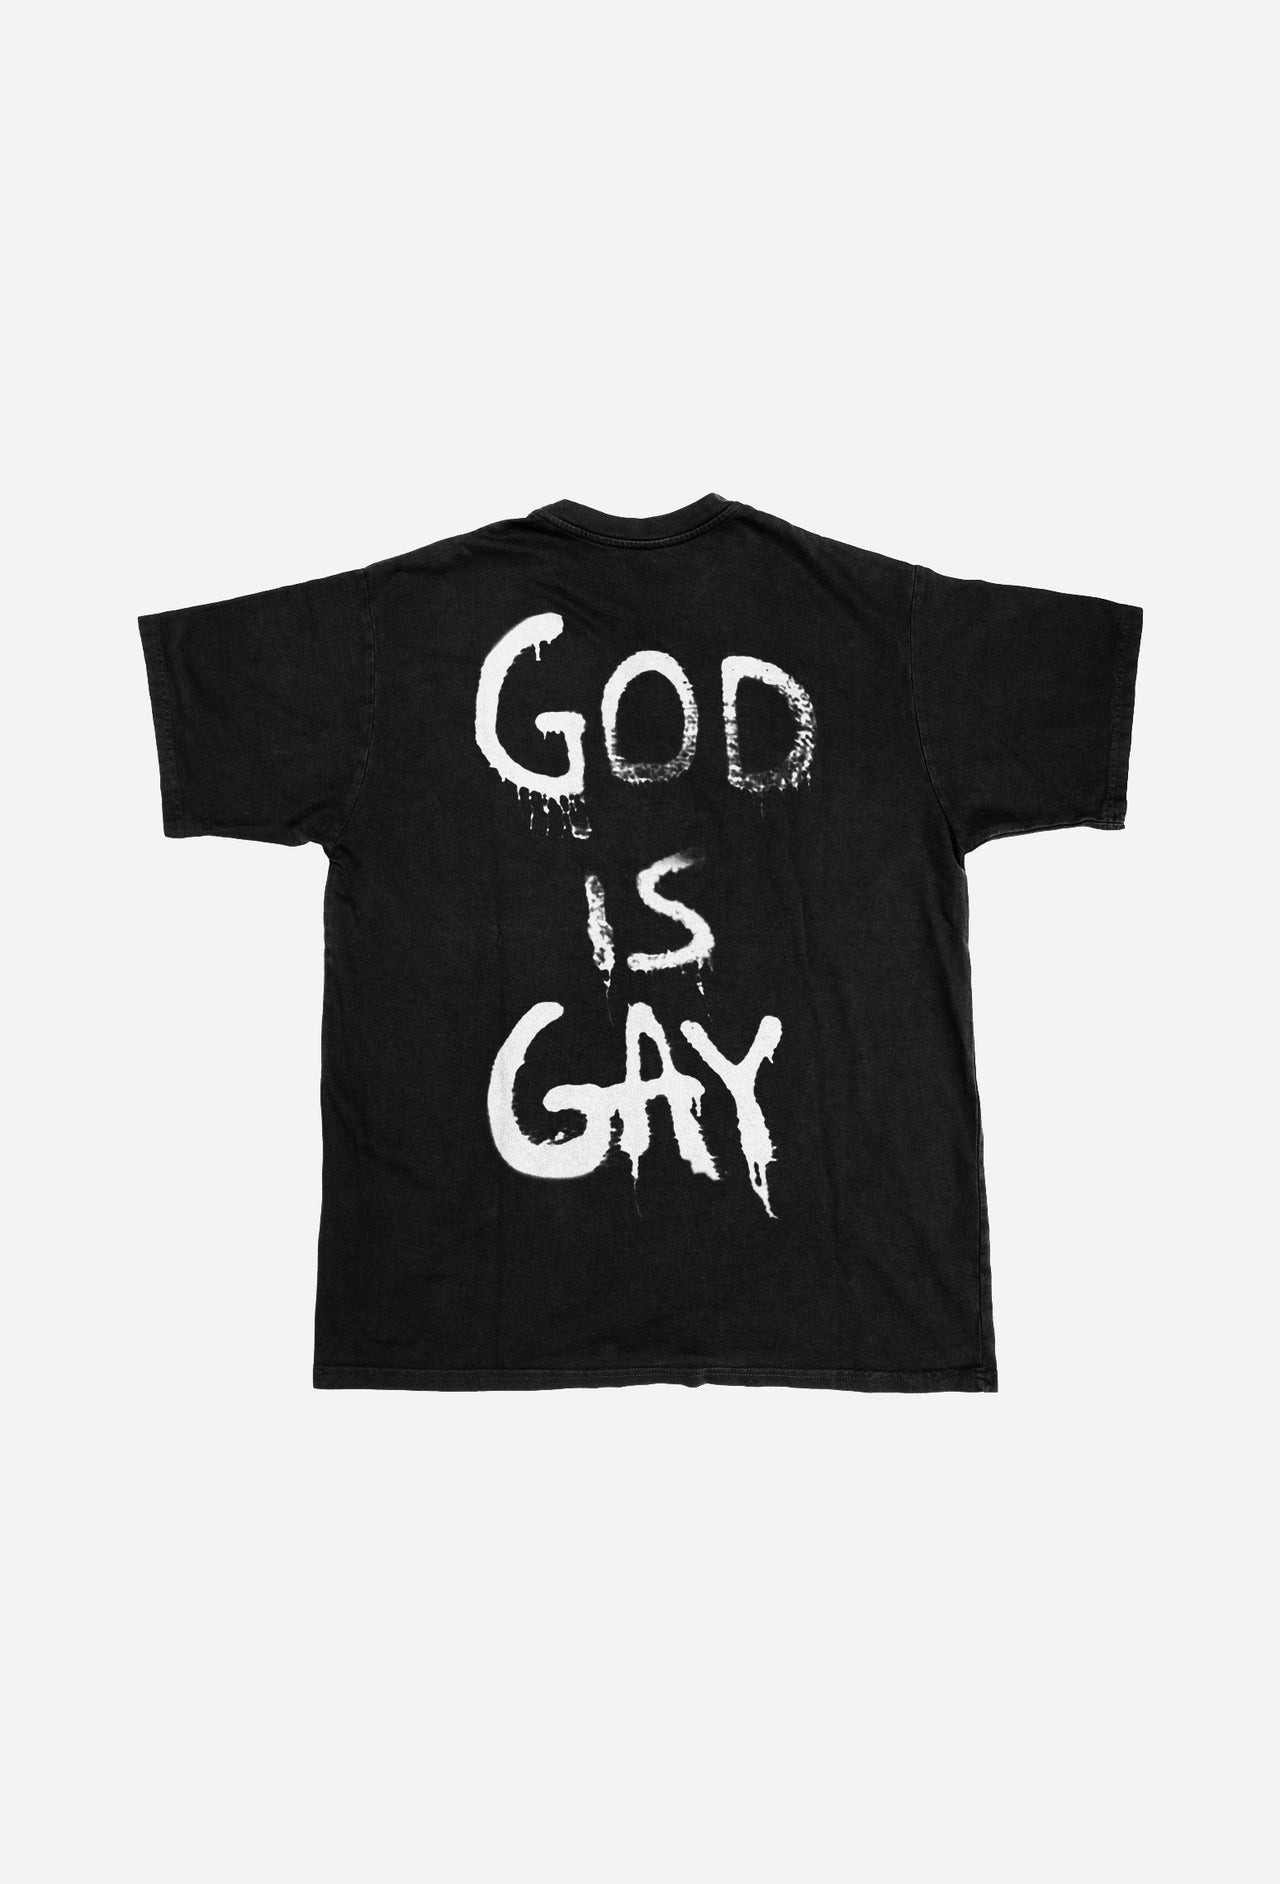 GOD IS GAY T-SHIRT